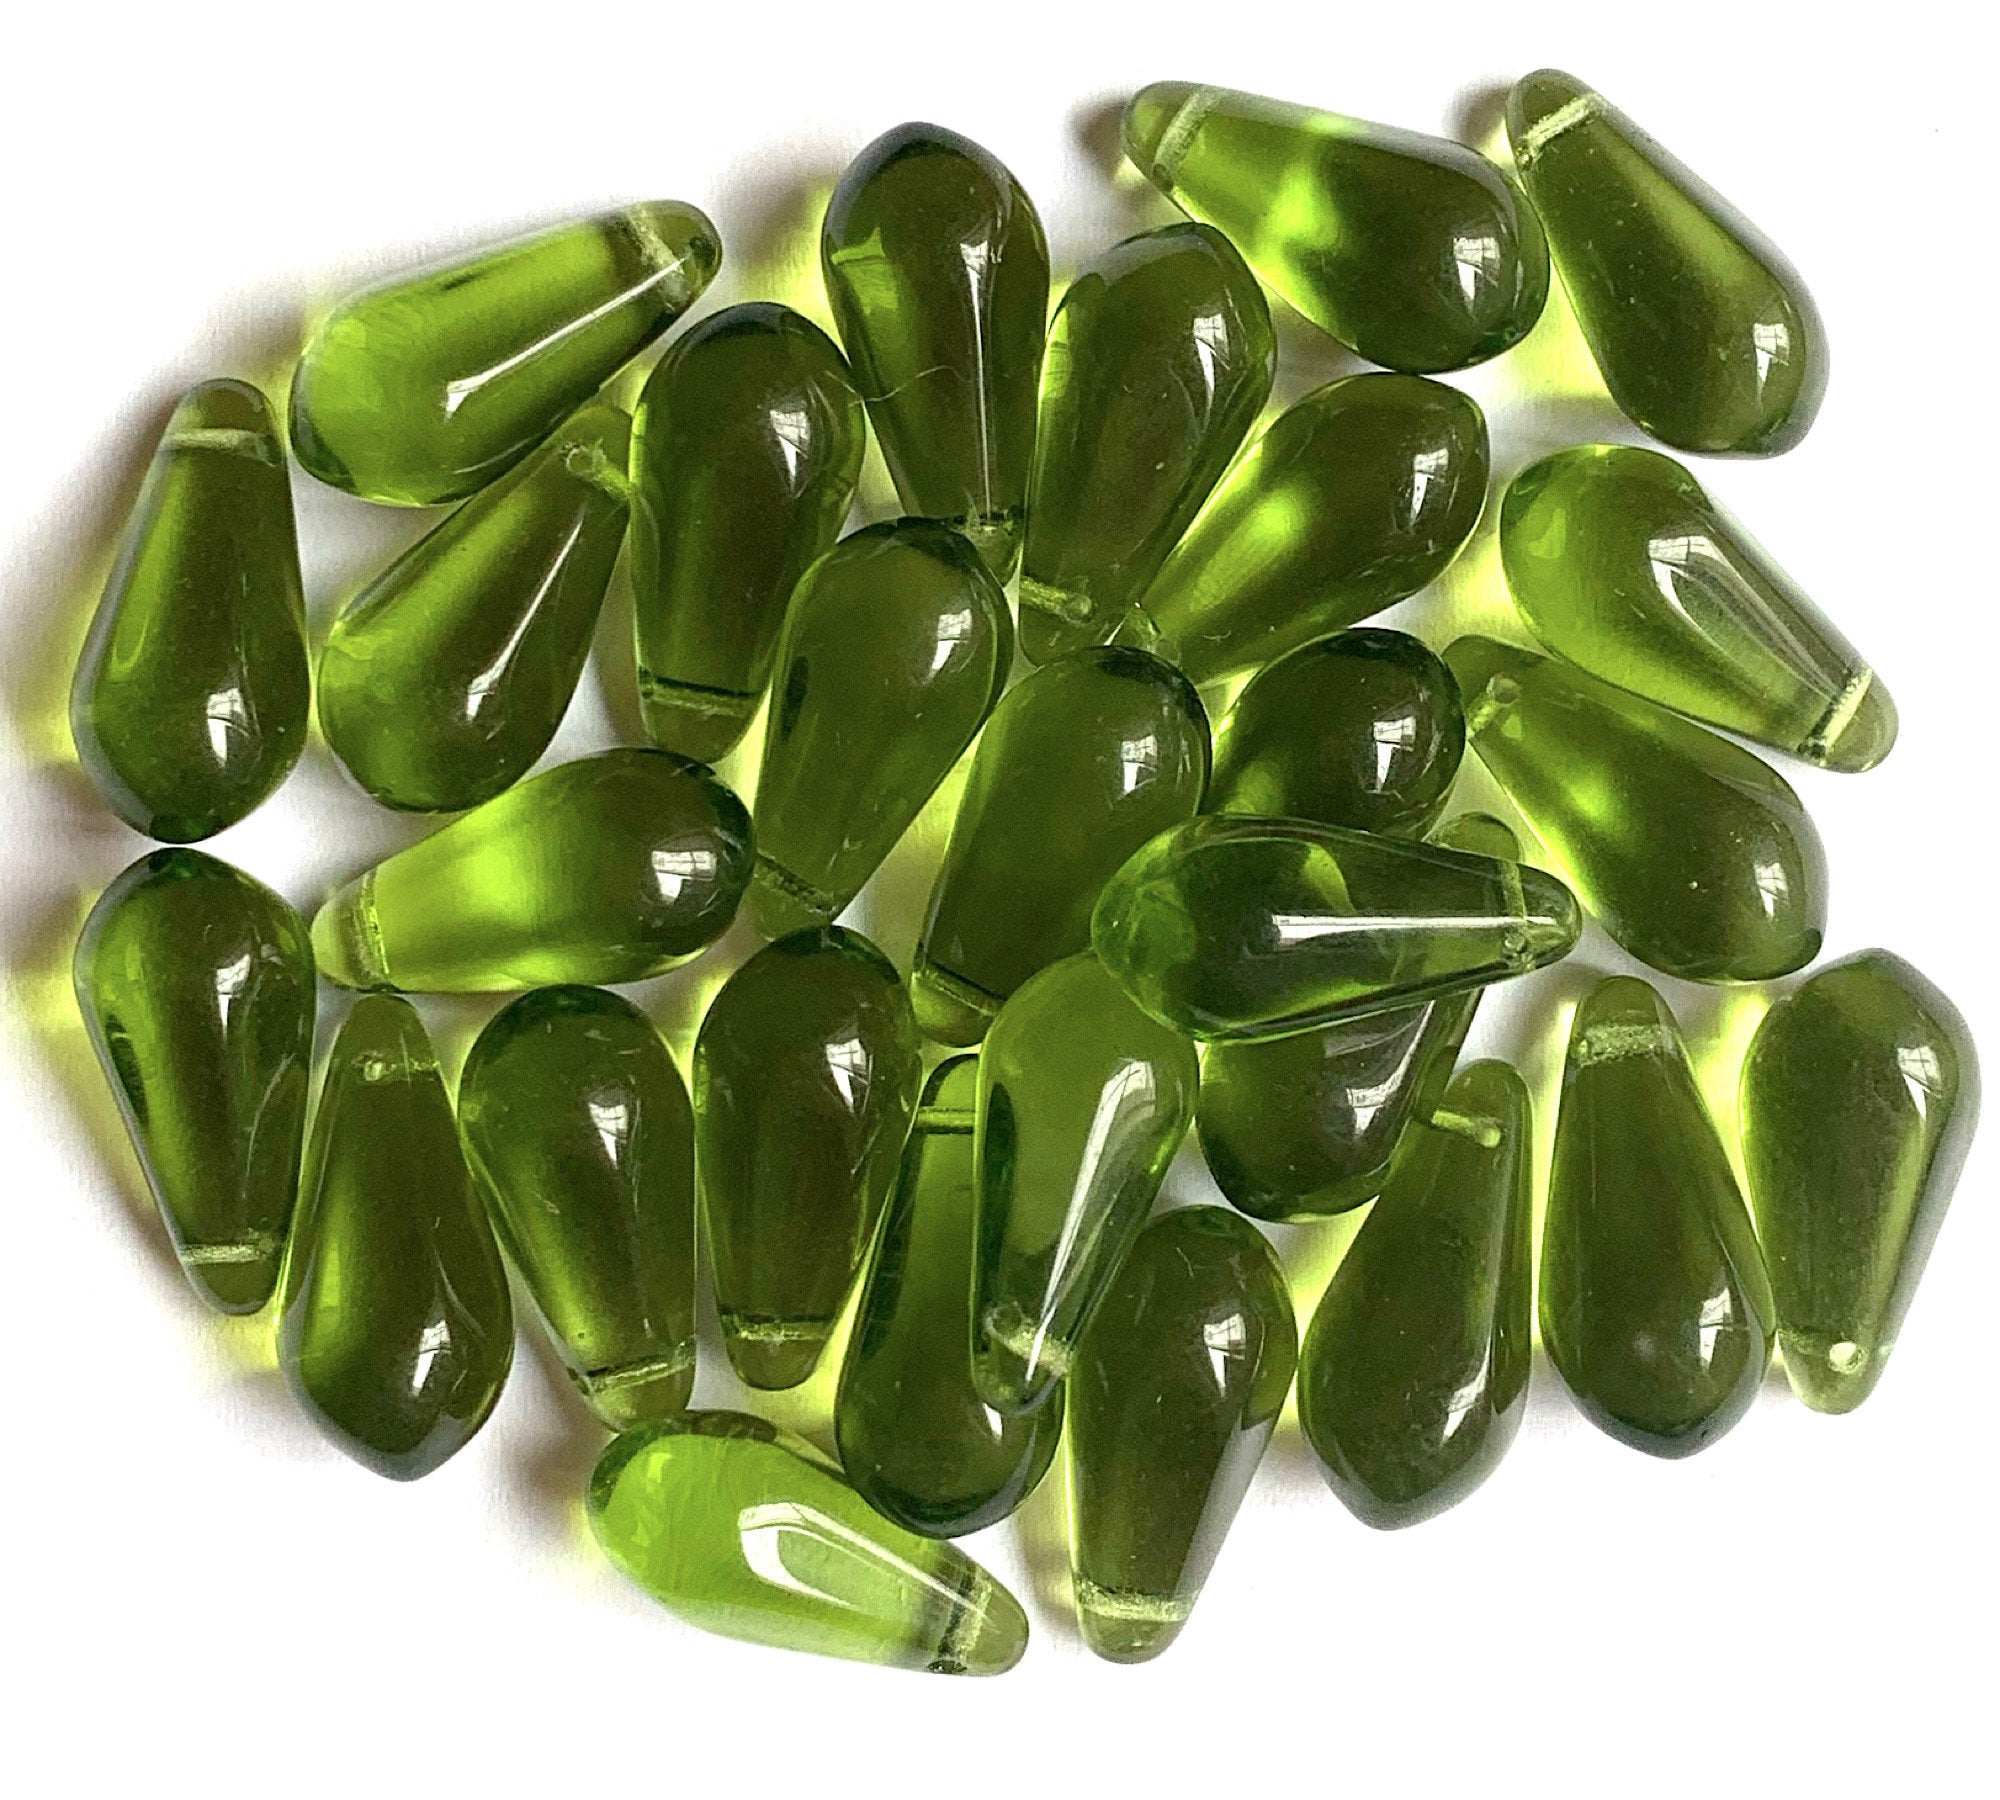 14x9mm Czech Glass Green Leaf Beads Olive Green Pressed Glass